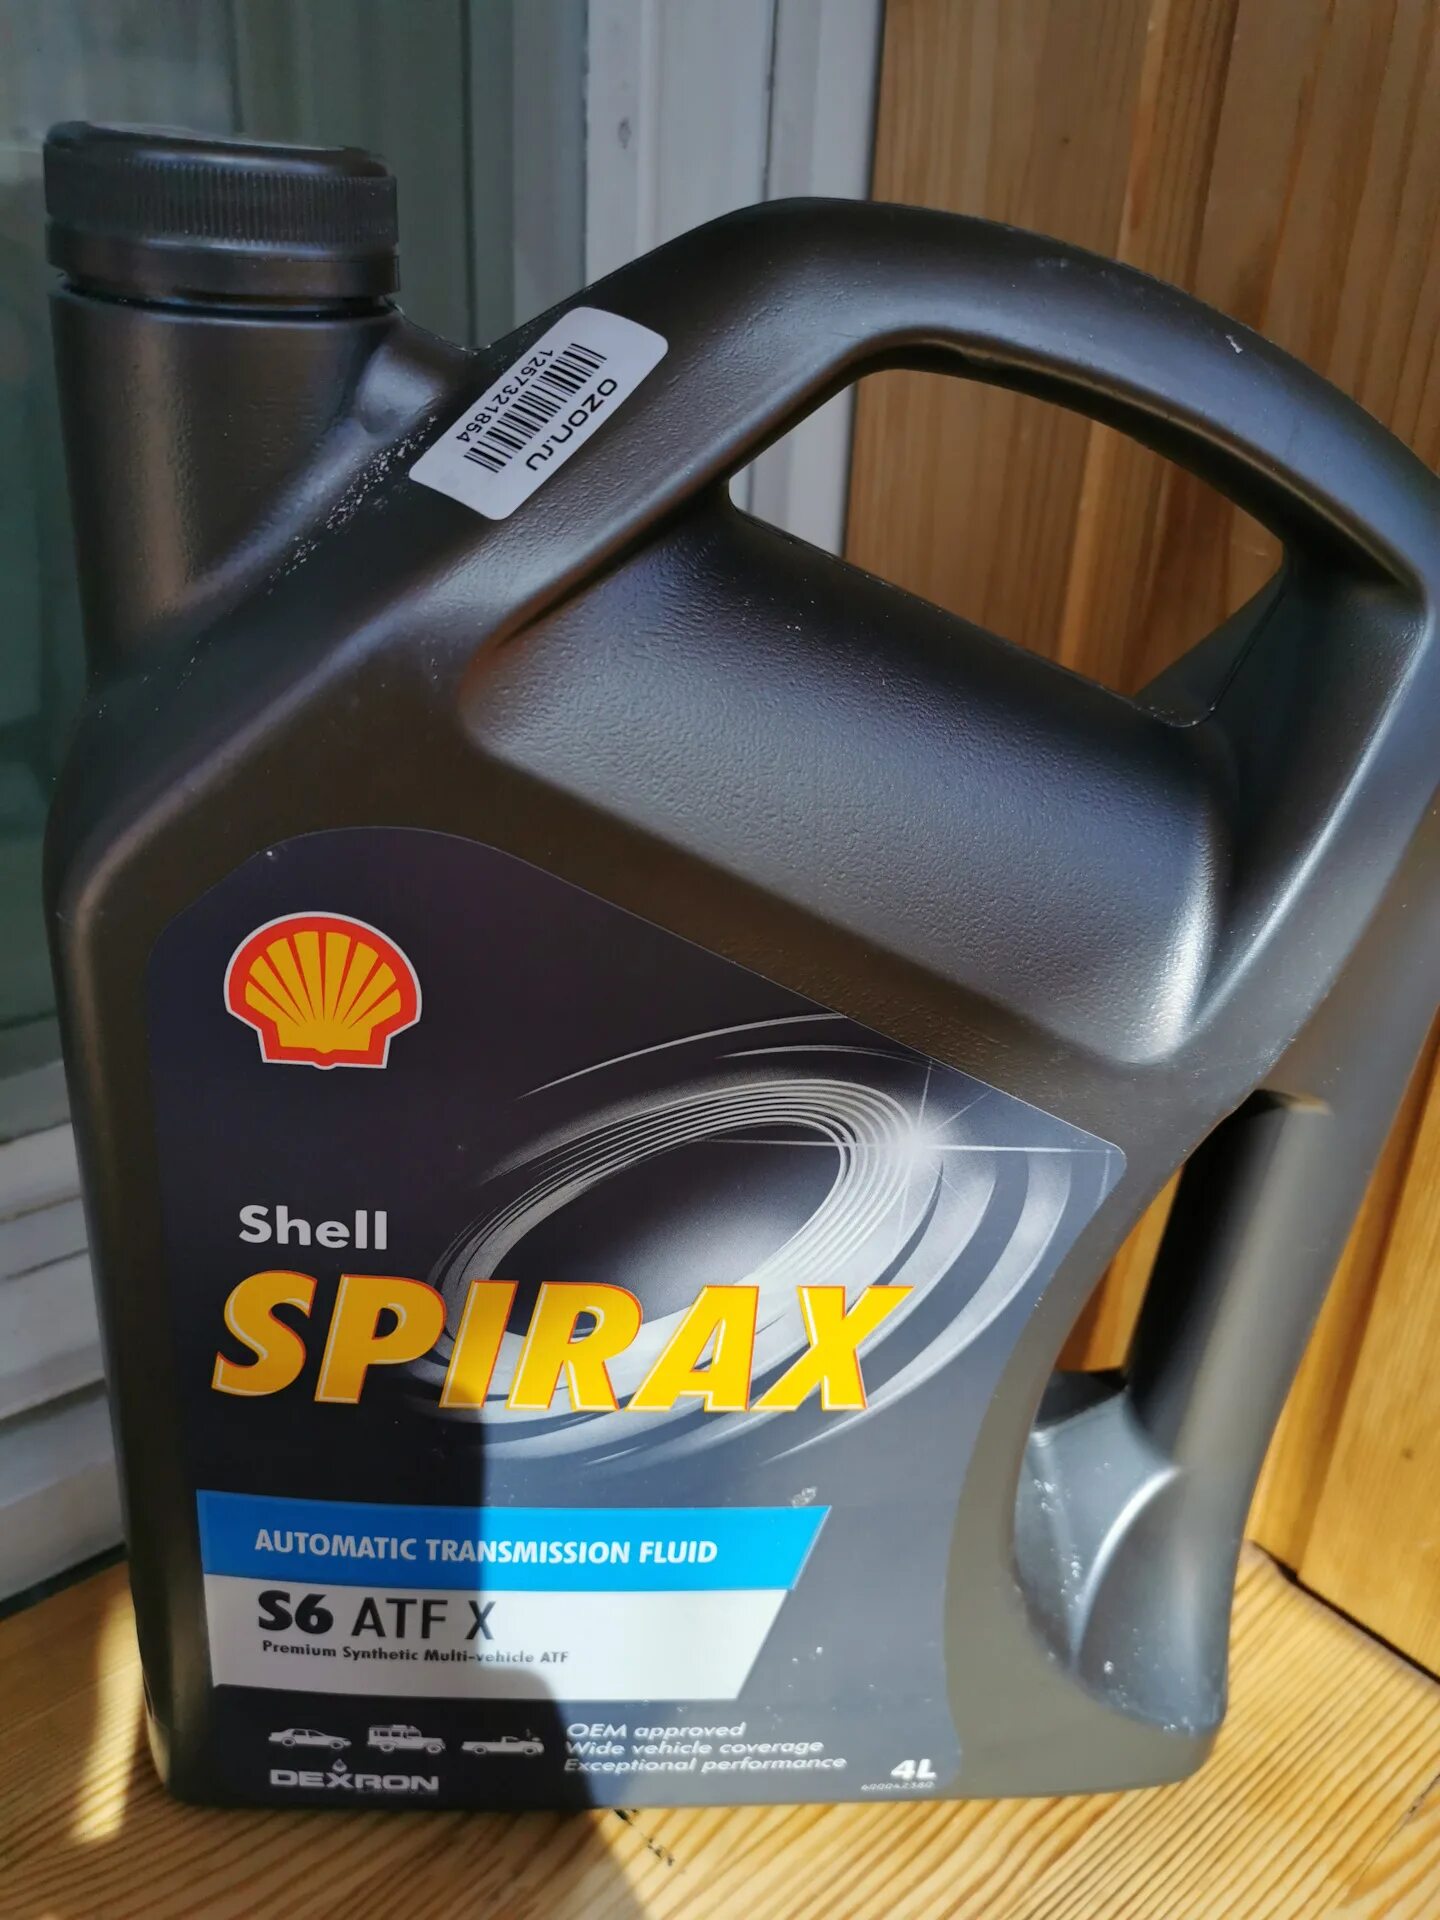 Shell s6 atf x. Shell Spirax s6 ATF X. Shell Spirax s6 ATF X 4 допуски. Shell Spirax s6 ATF X 550046519 масло трансмиссионное Shell Spirax s6 ATF X 1 Л 550046519. АТФ s6 ZM Шелл.